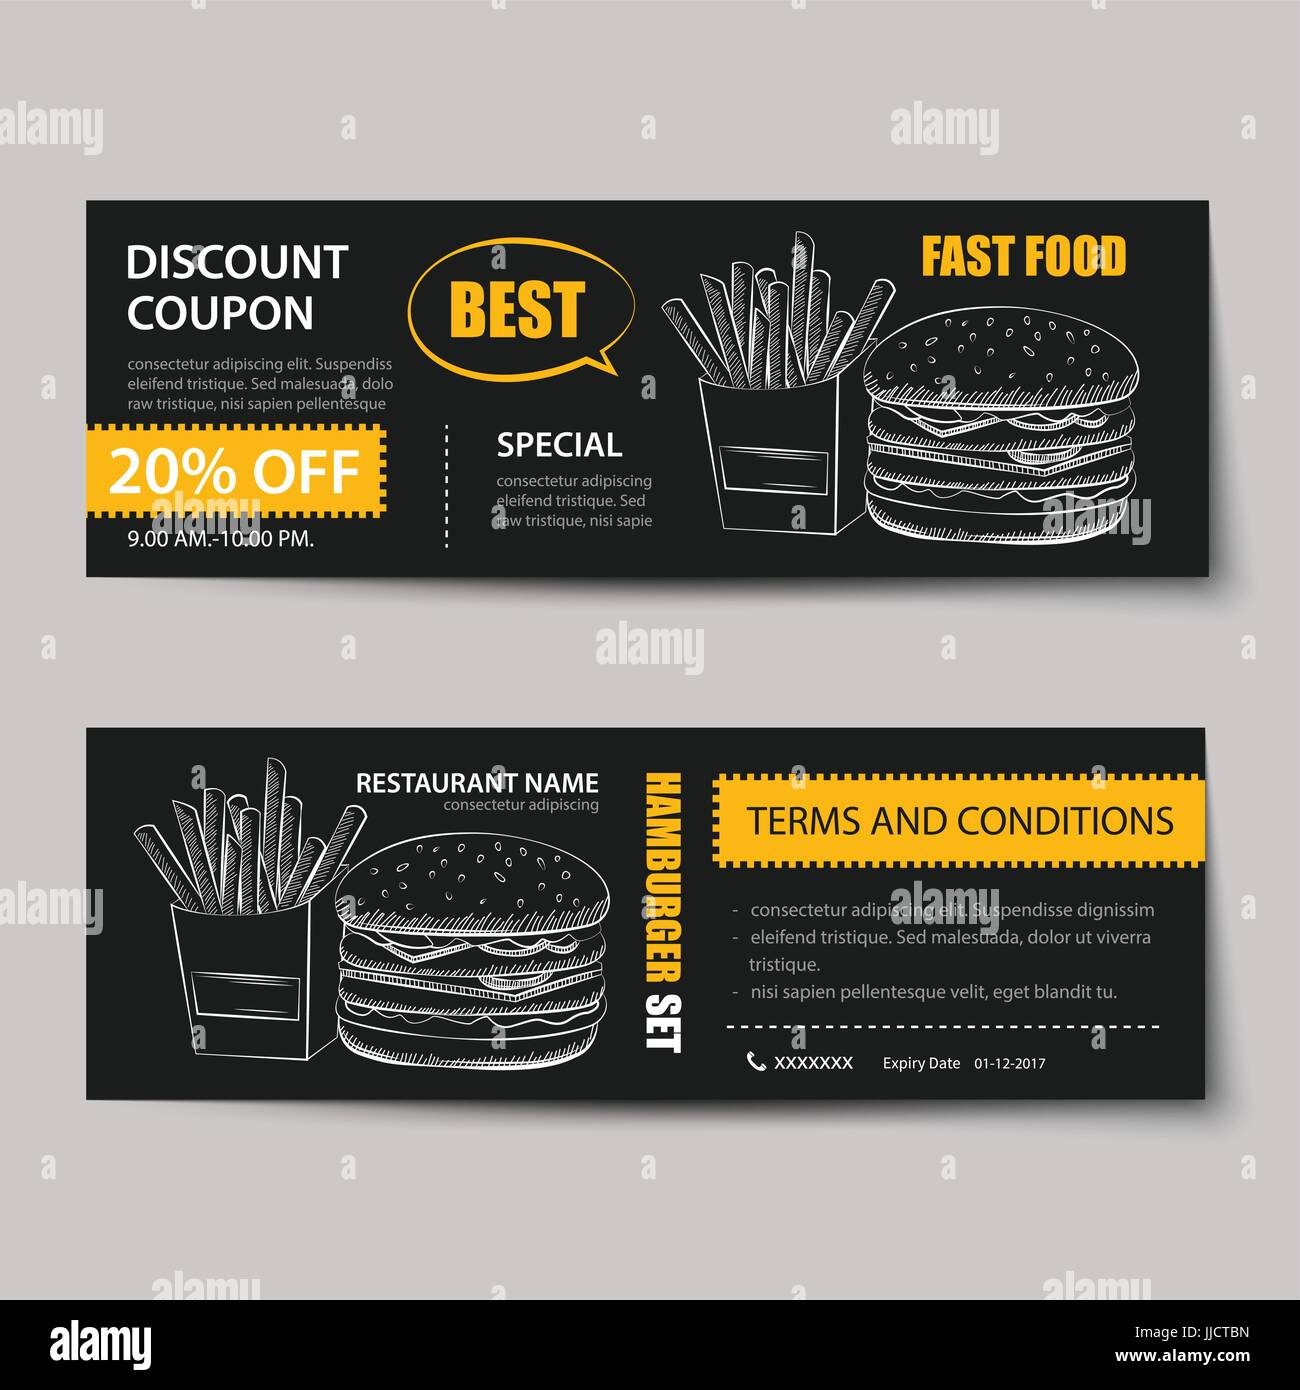 fast food coupon discount template flat design Stock Vector